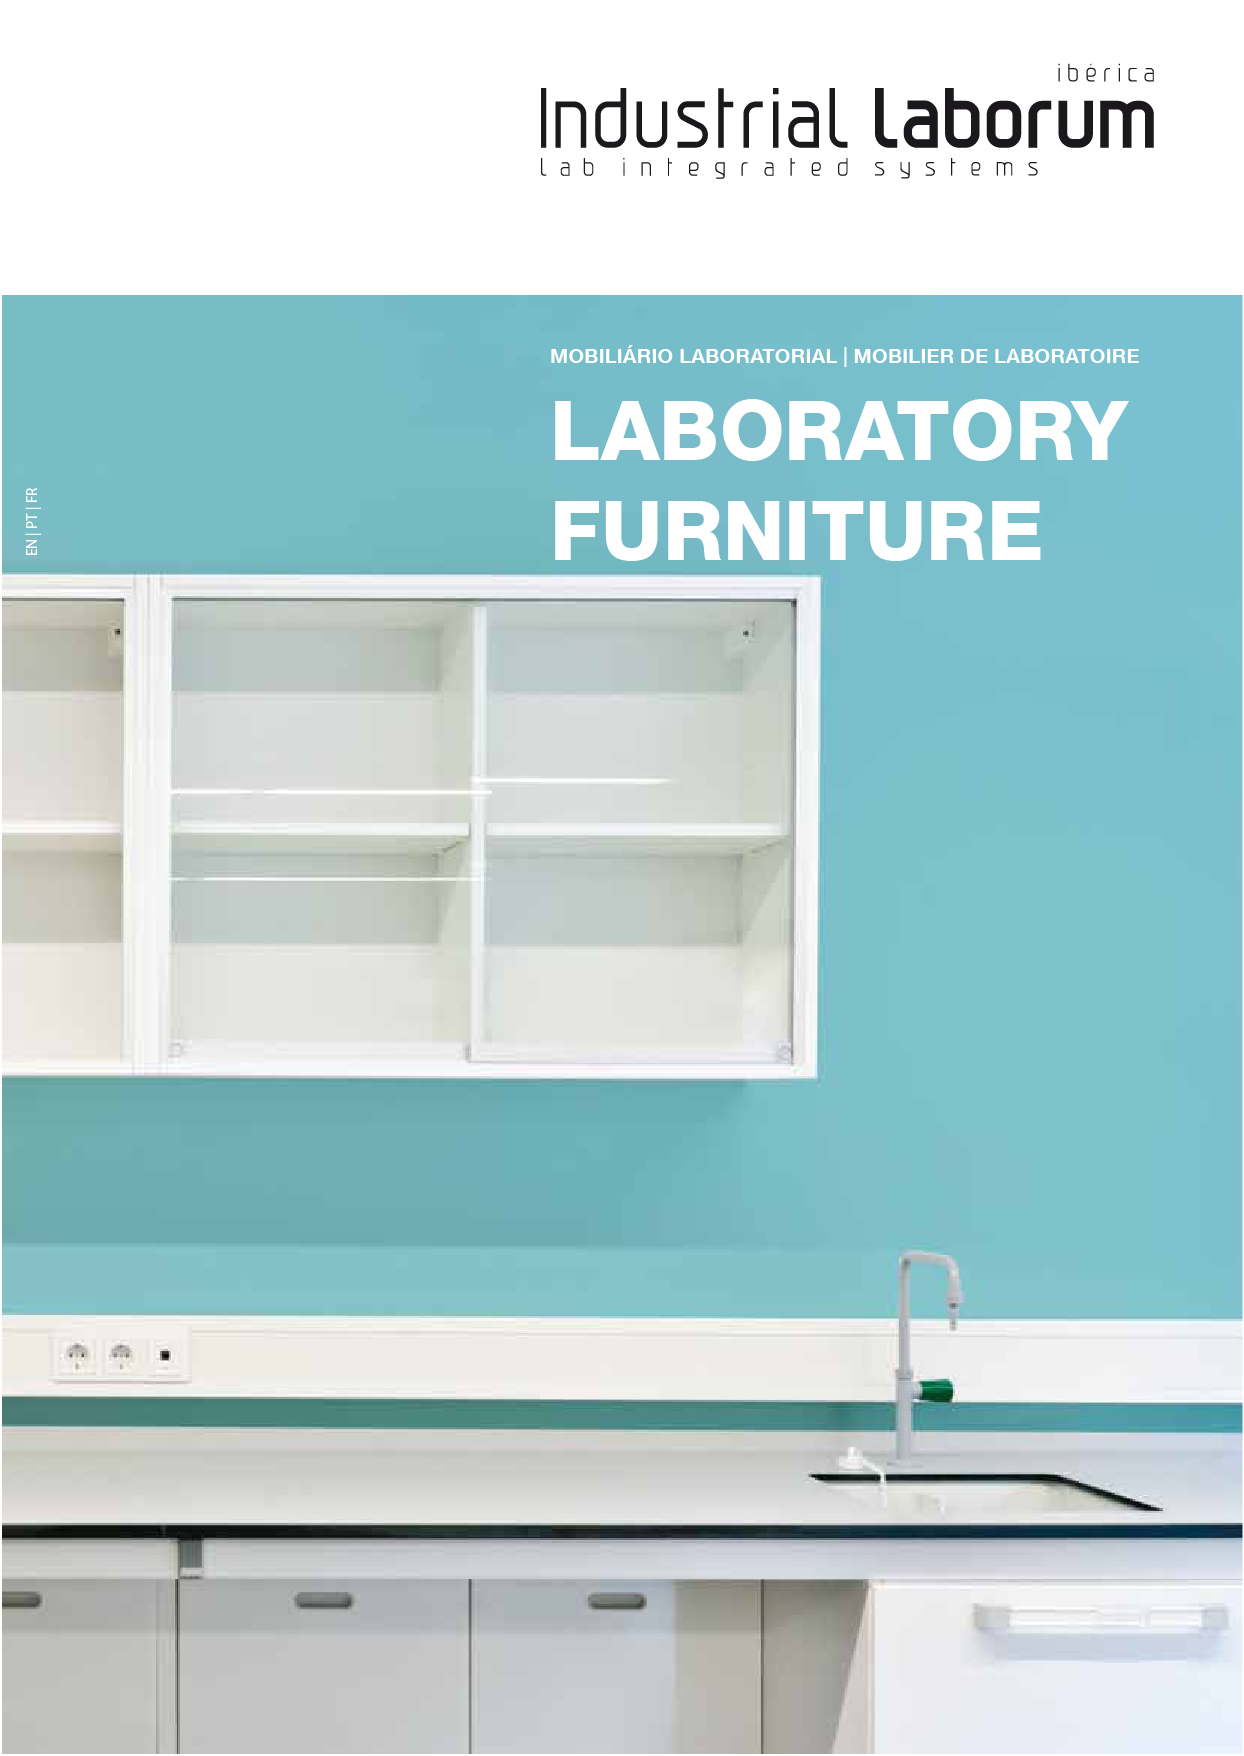 Catalog of laboratory furniture Industrial Laborum Ibérica